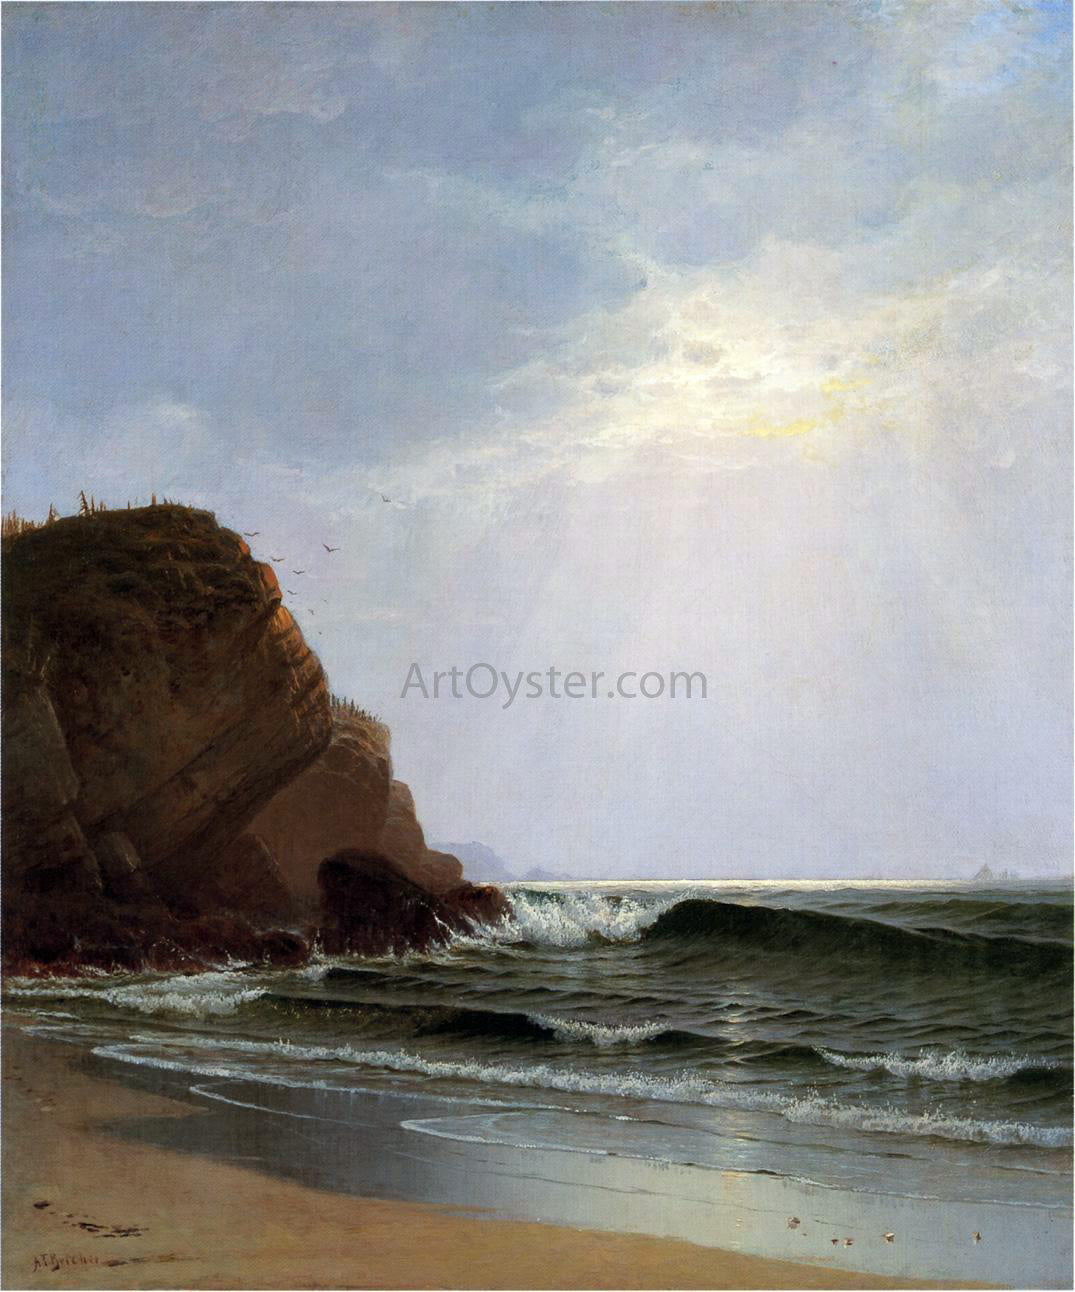  Alfred Thompson Bricher Otter Cliffs, Mount Desert Island, Maine - Hand Painted Oil Painting